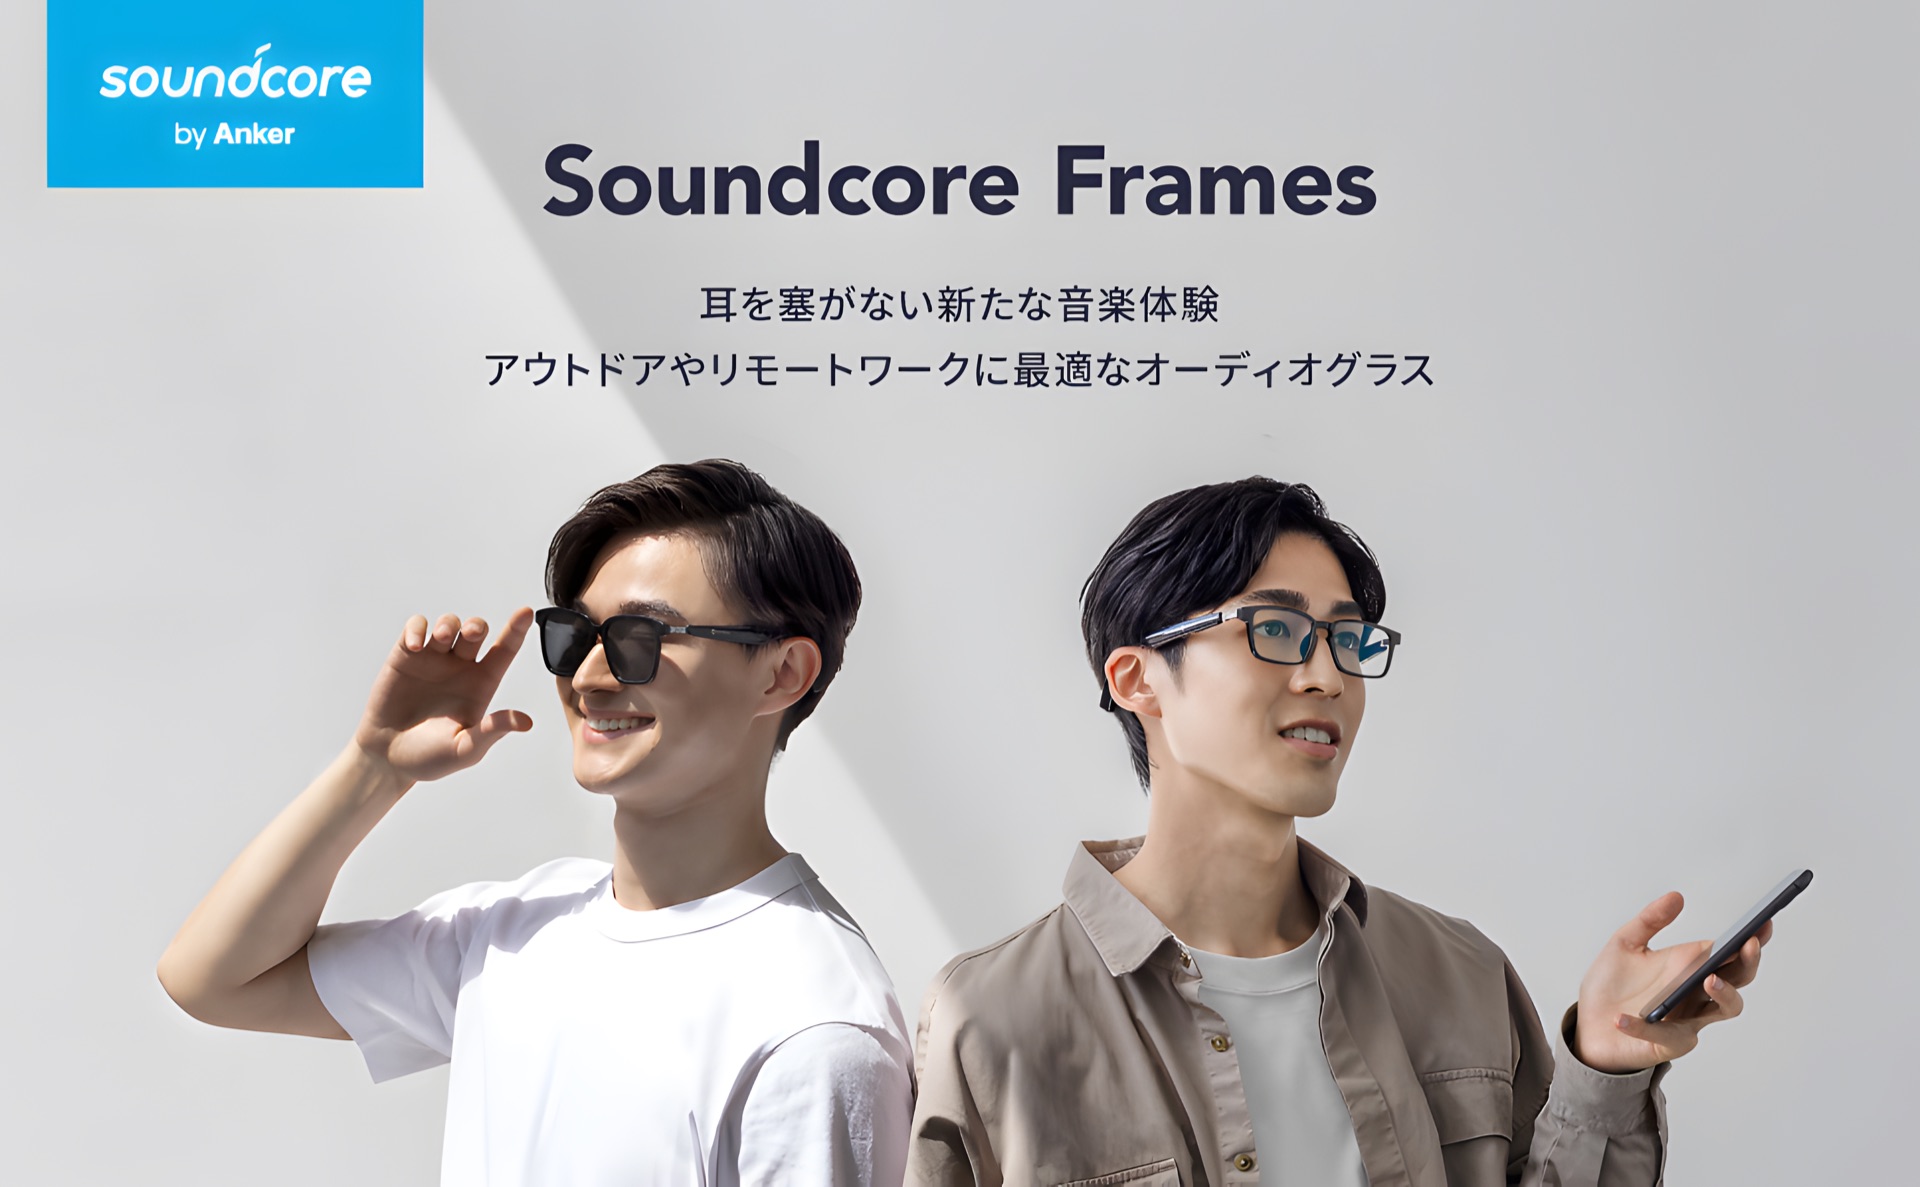 Anker Soundcore Frames Cafe and Frames Landmark